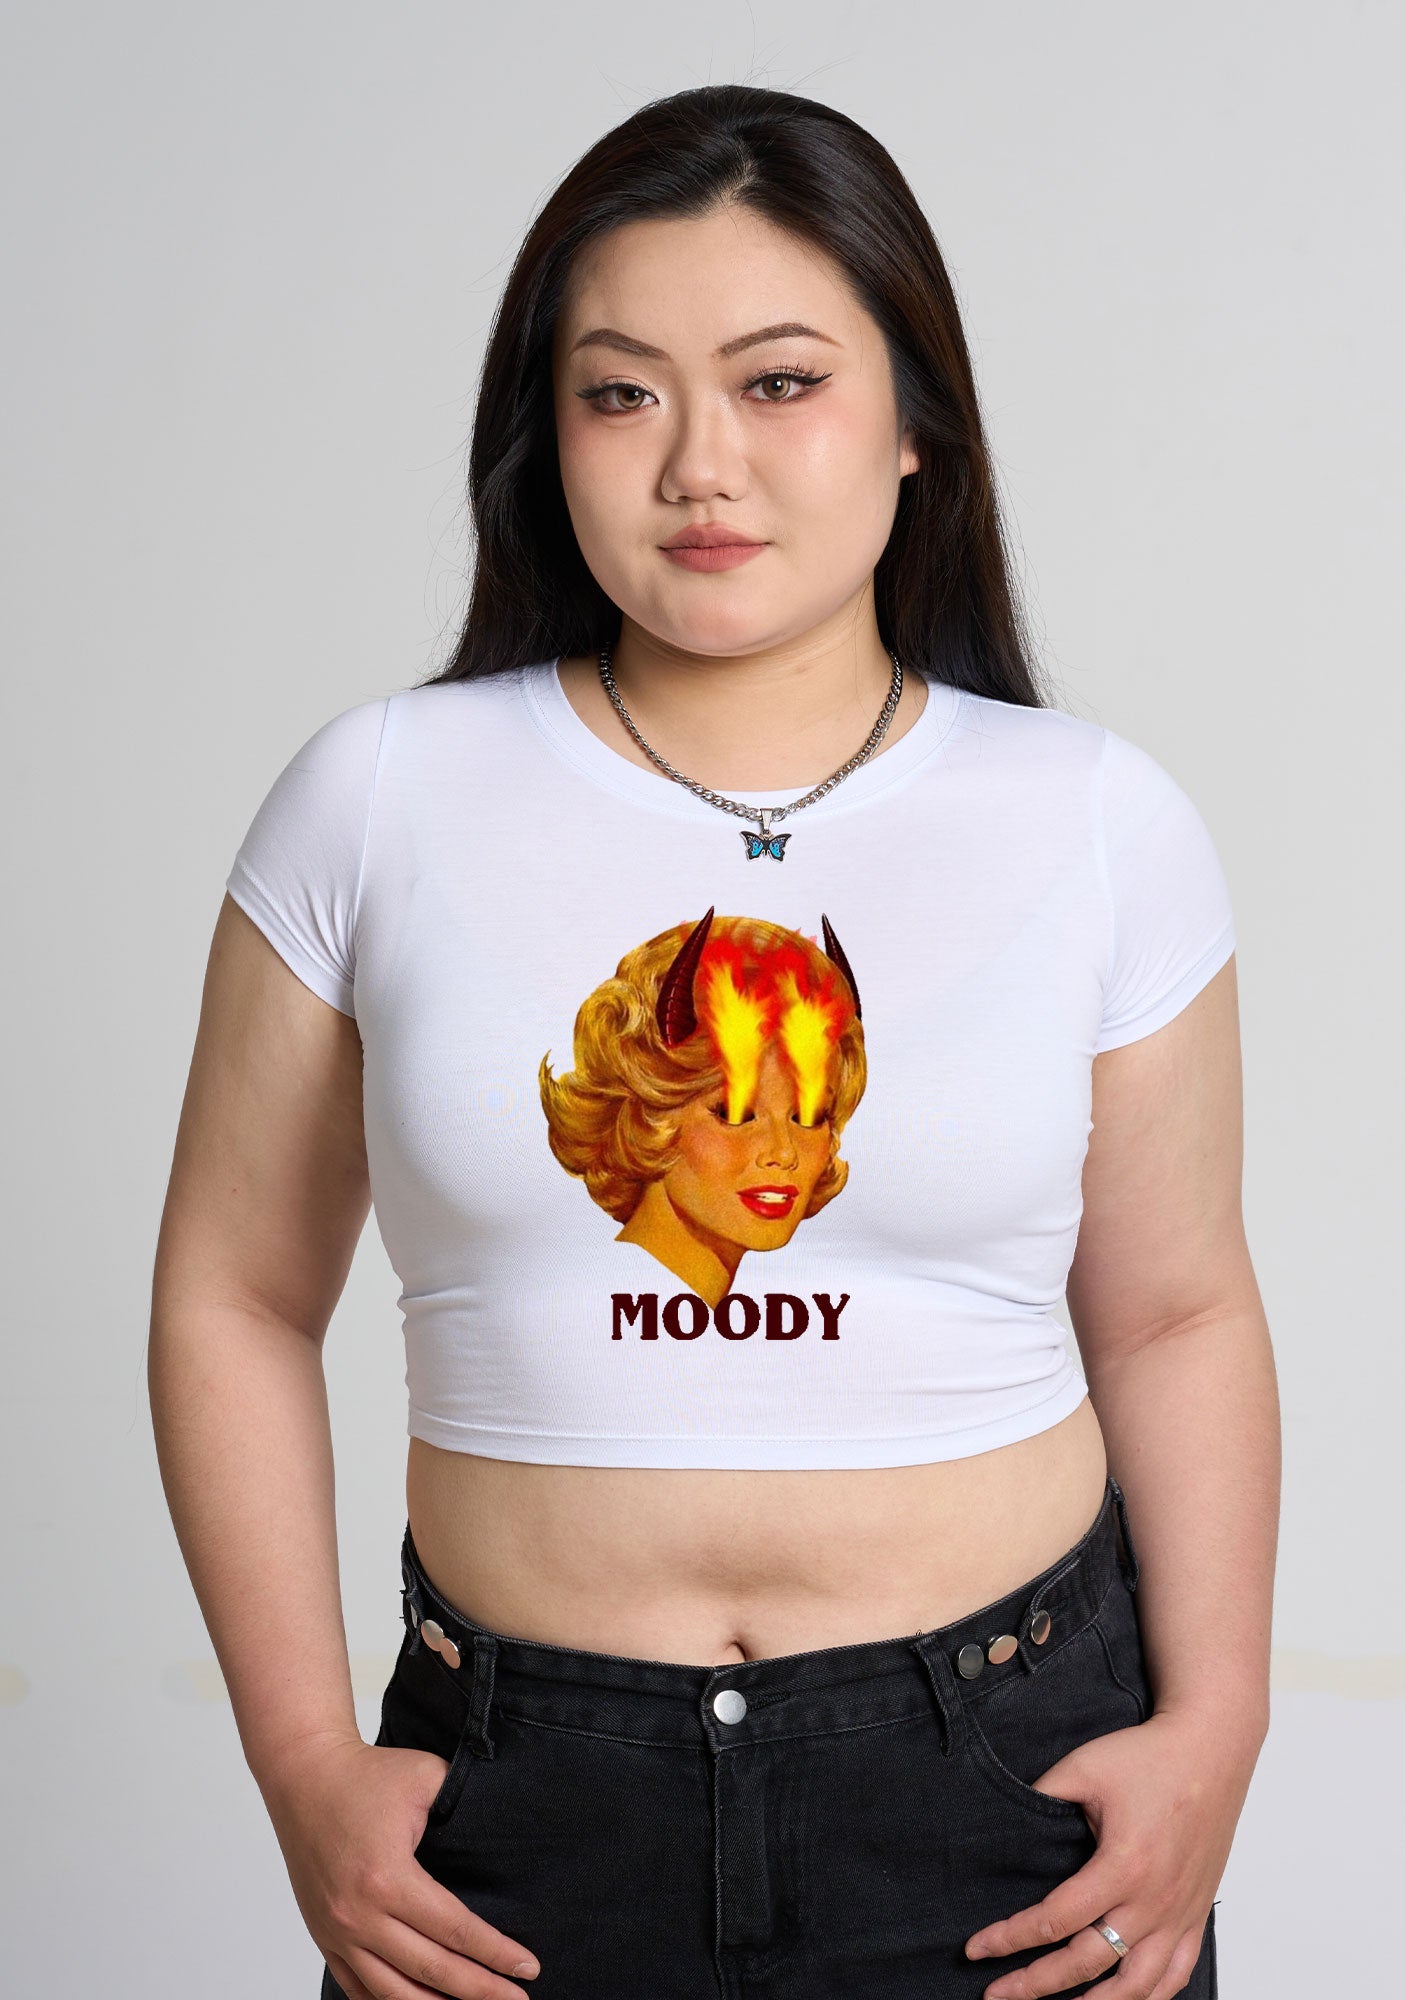 Curvy Moody Angry Woman Baby Tee